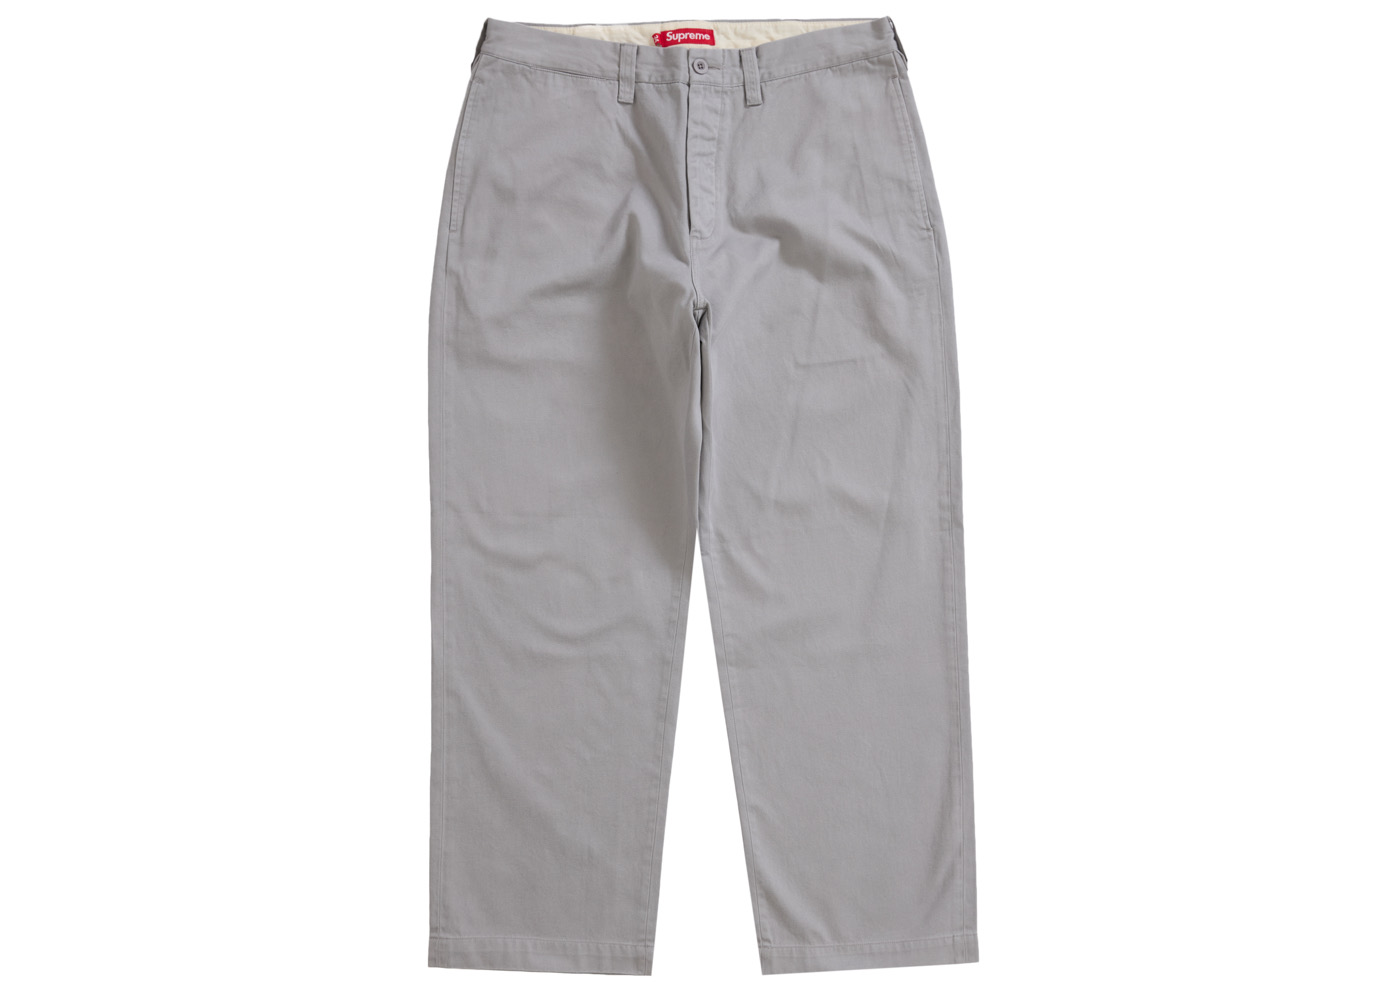 supreme chino pant greyサイズ34 - パンツ